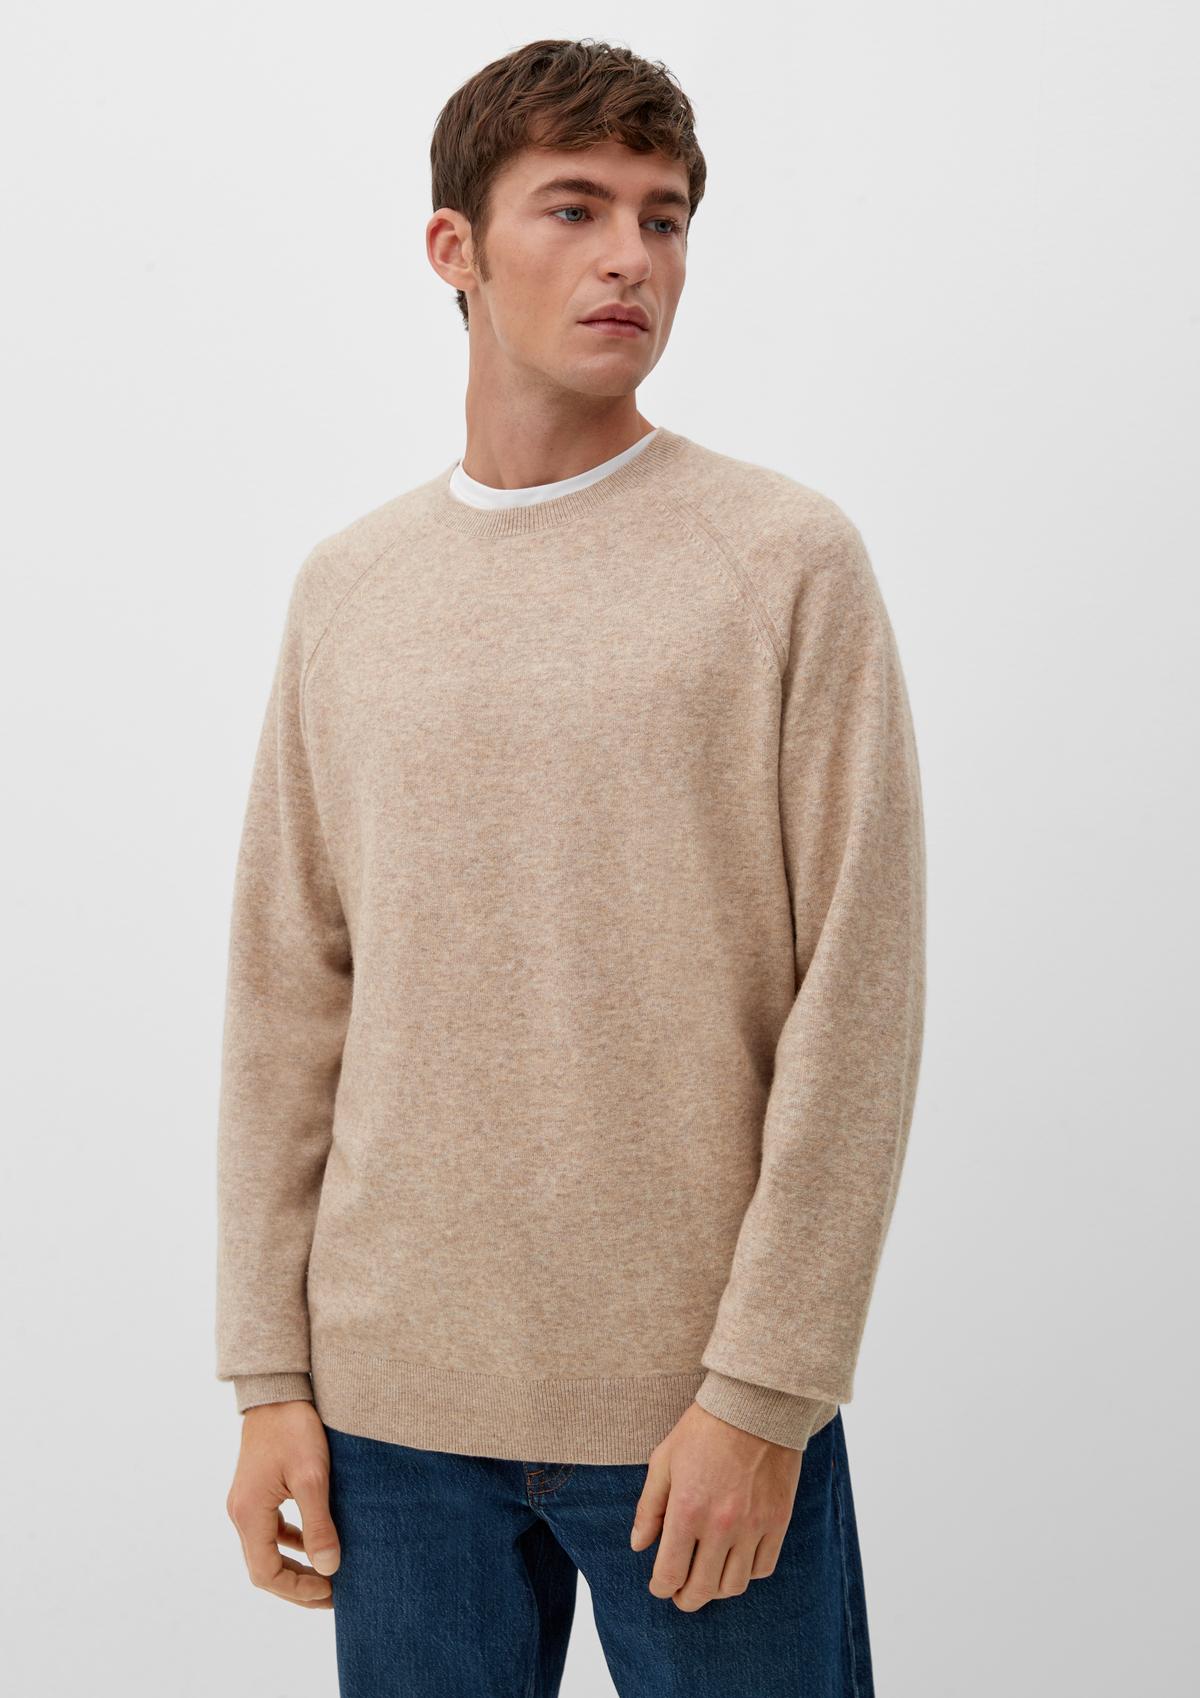 Feinstrick-Pullover aus Wollmix - sandfarben